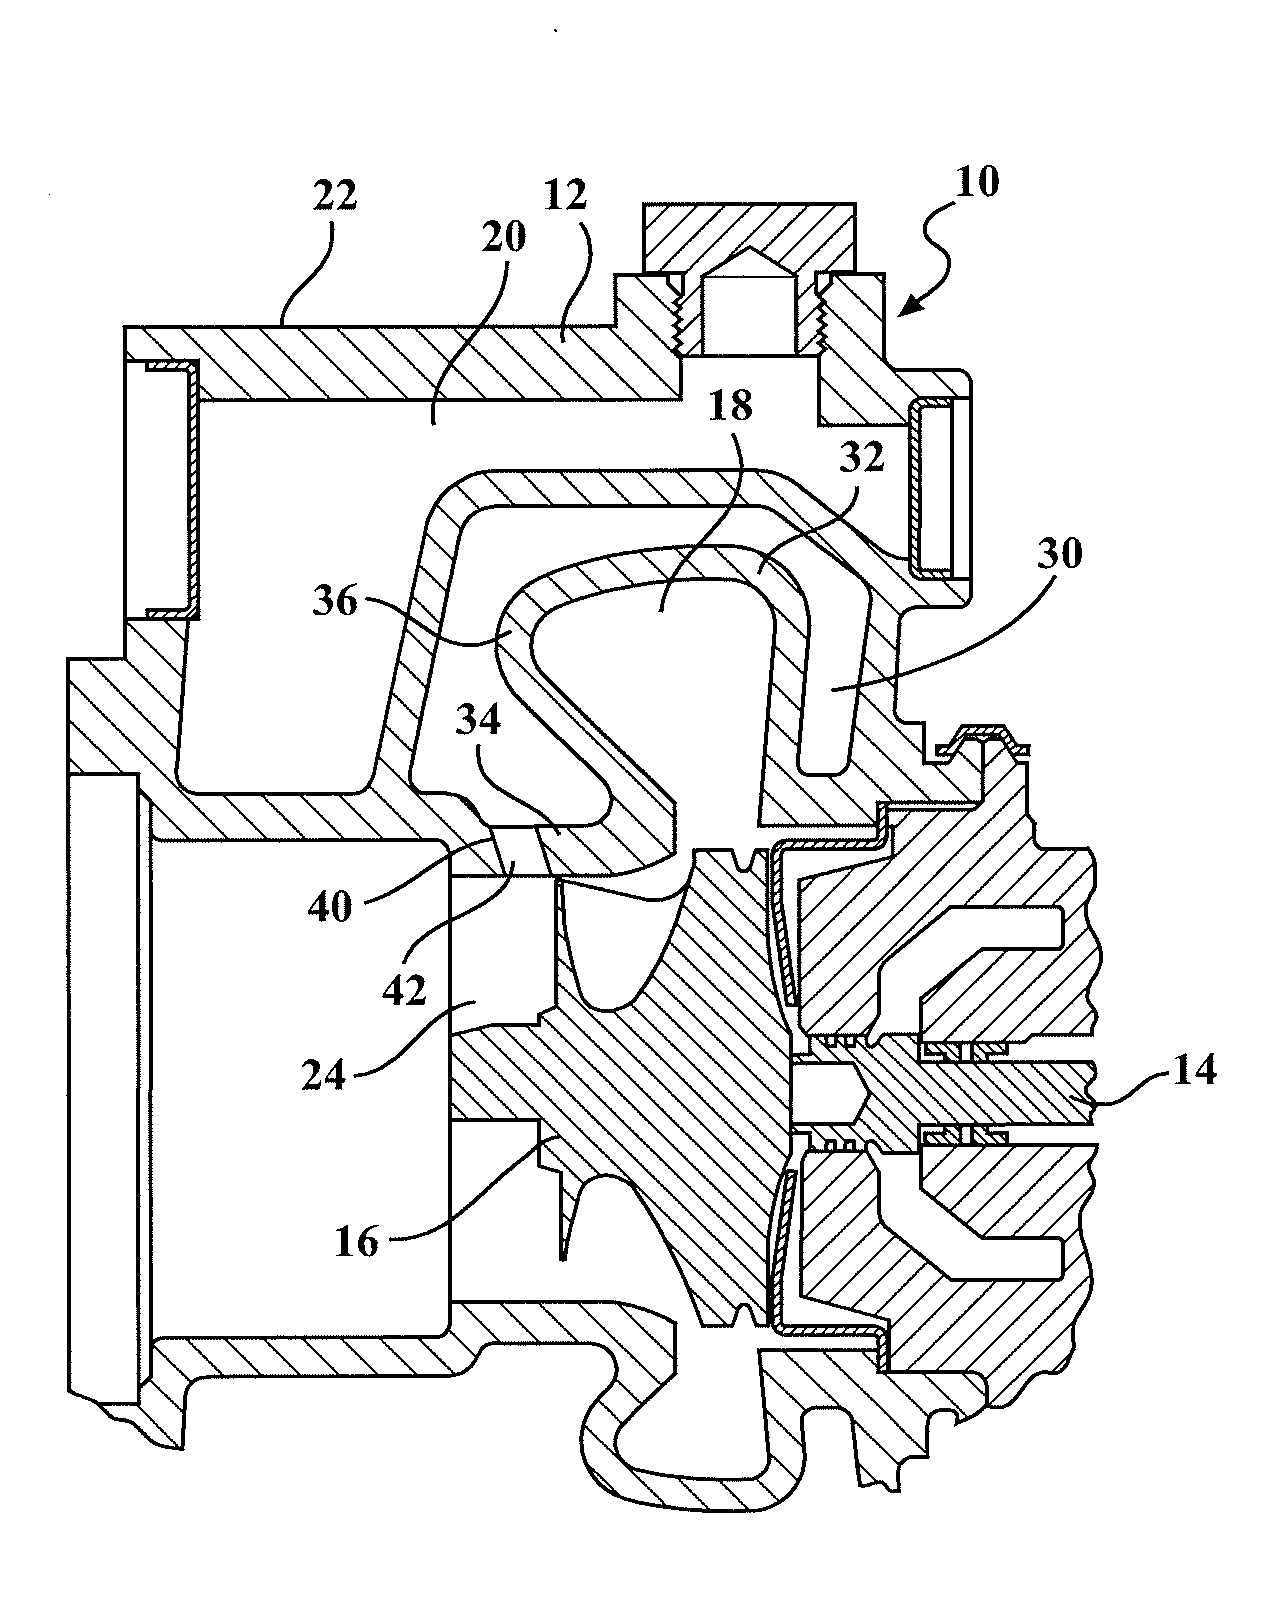 Liquid-cooled turbine housing with intermediate chamber